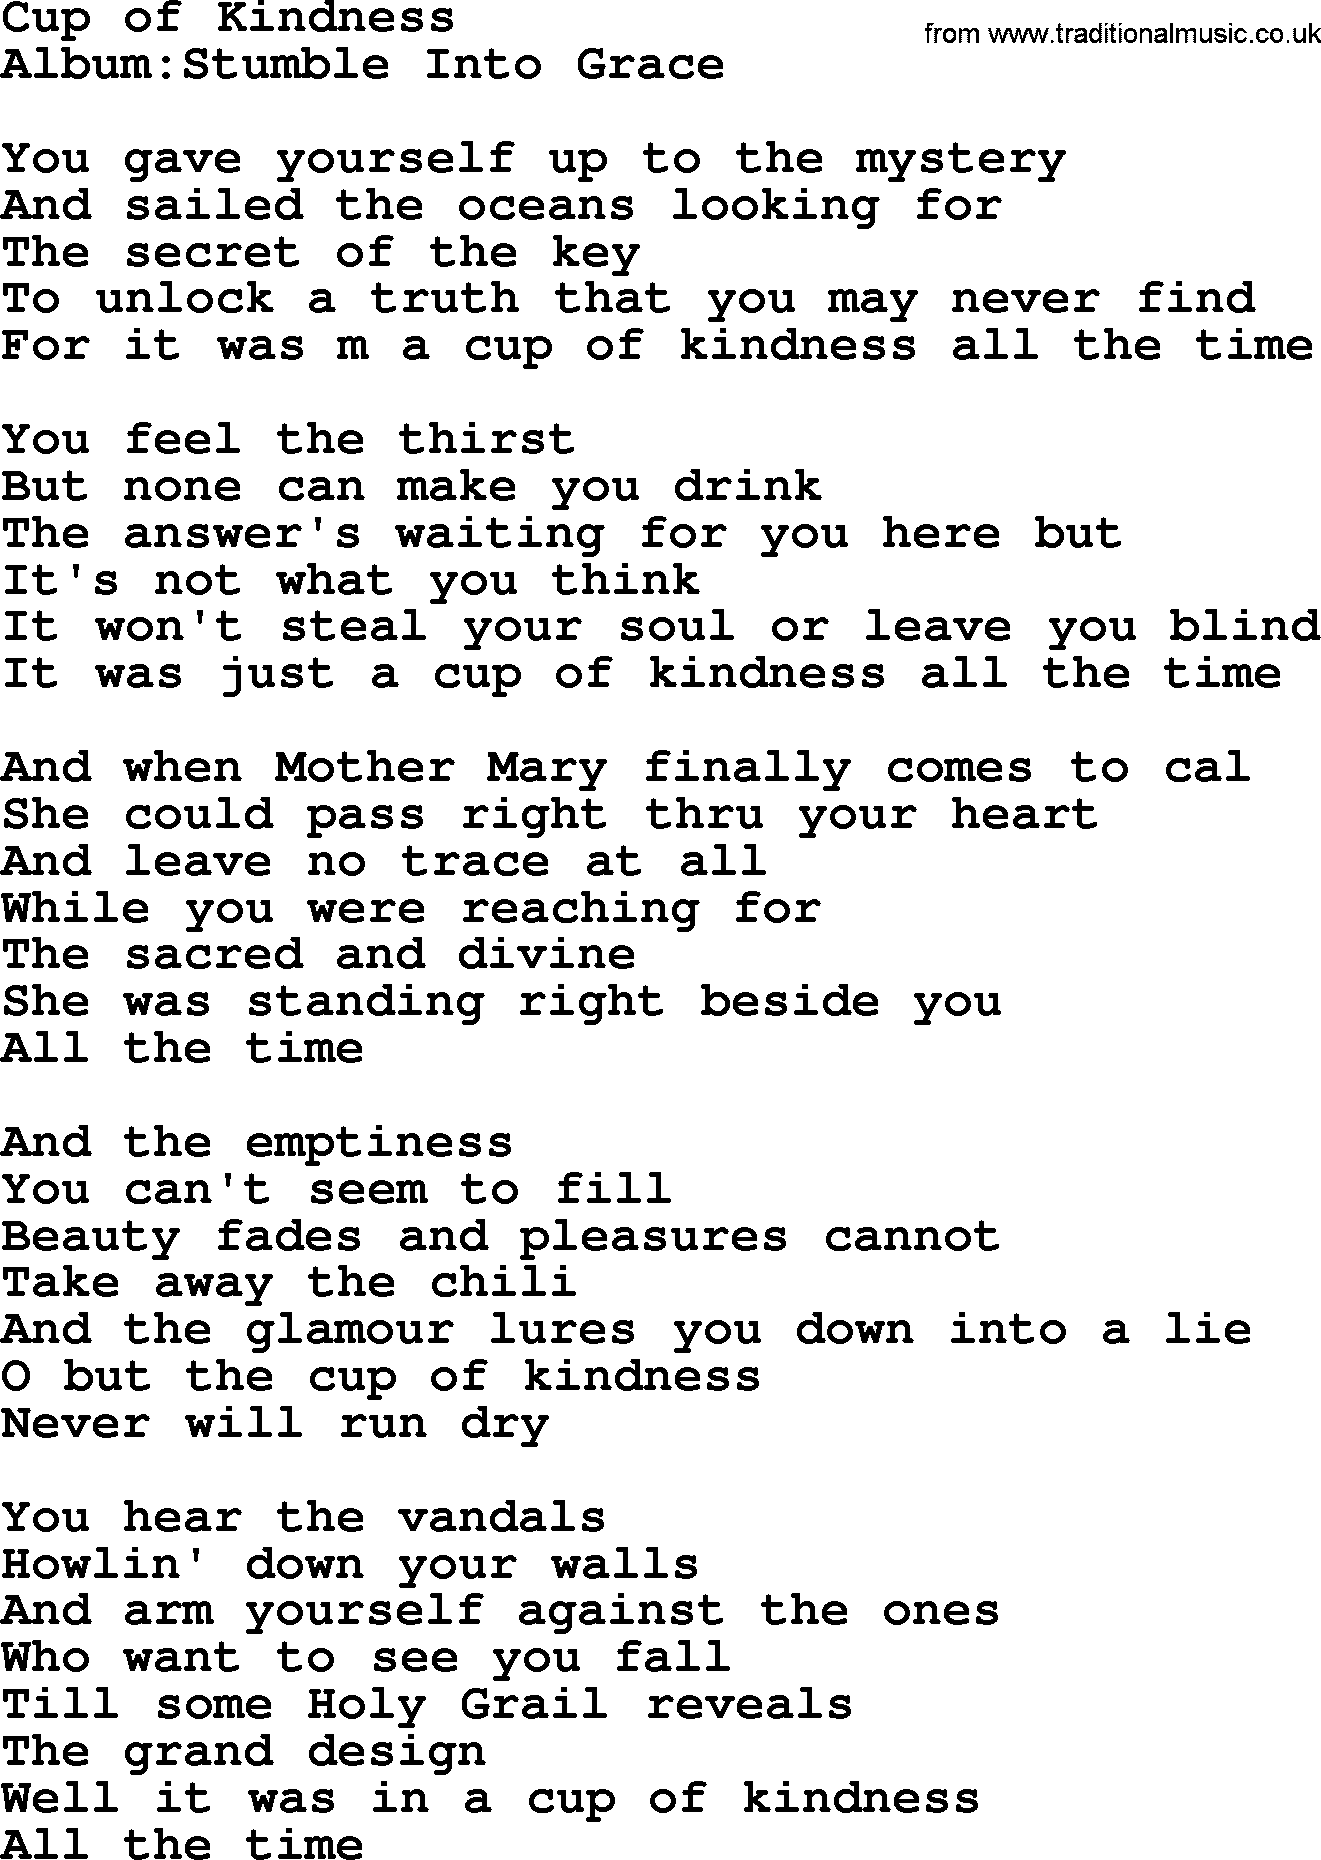 Emmylou Harris song: Cup of Kindness lyrics